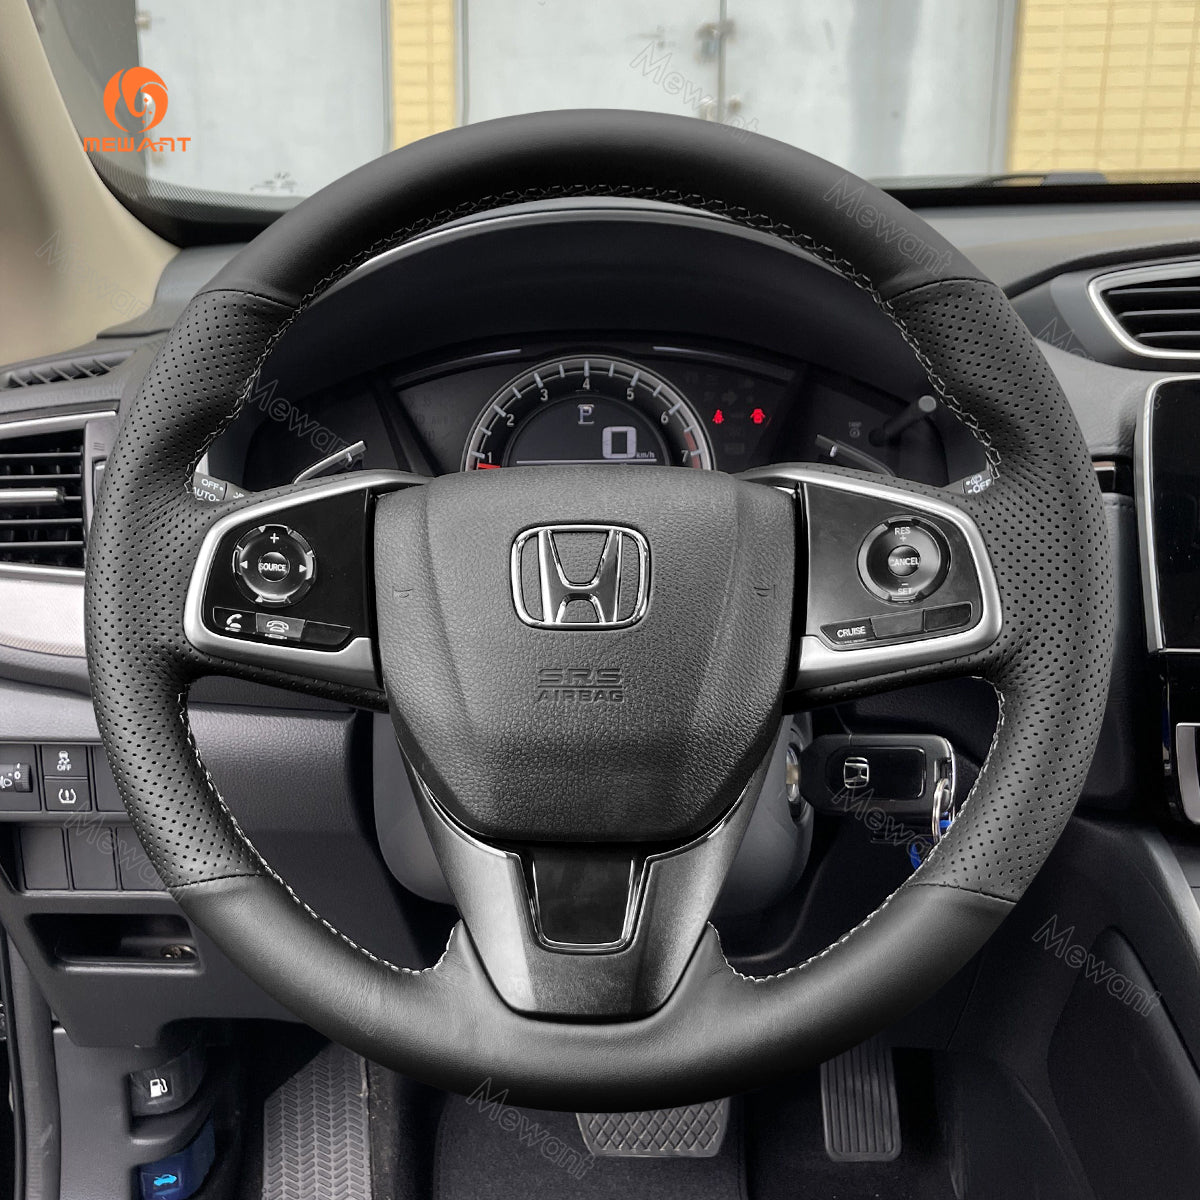 MEWANT DIY Black Leather Suede Carbon Fiber Car Steering Wheel Cover for Honda Civic 10 X CR-V CRV Clarity